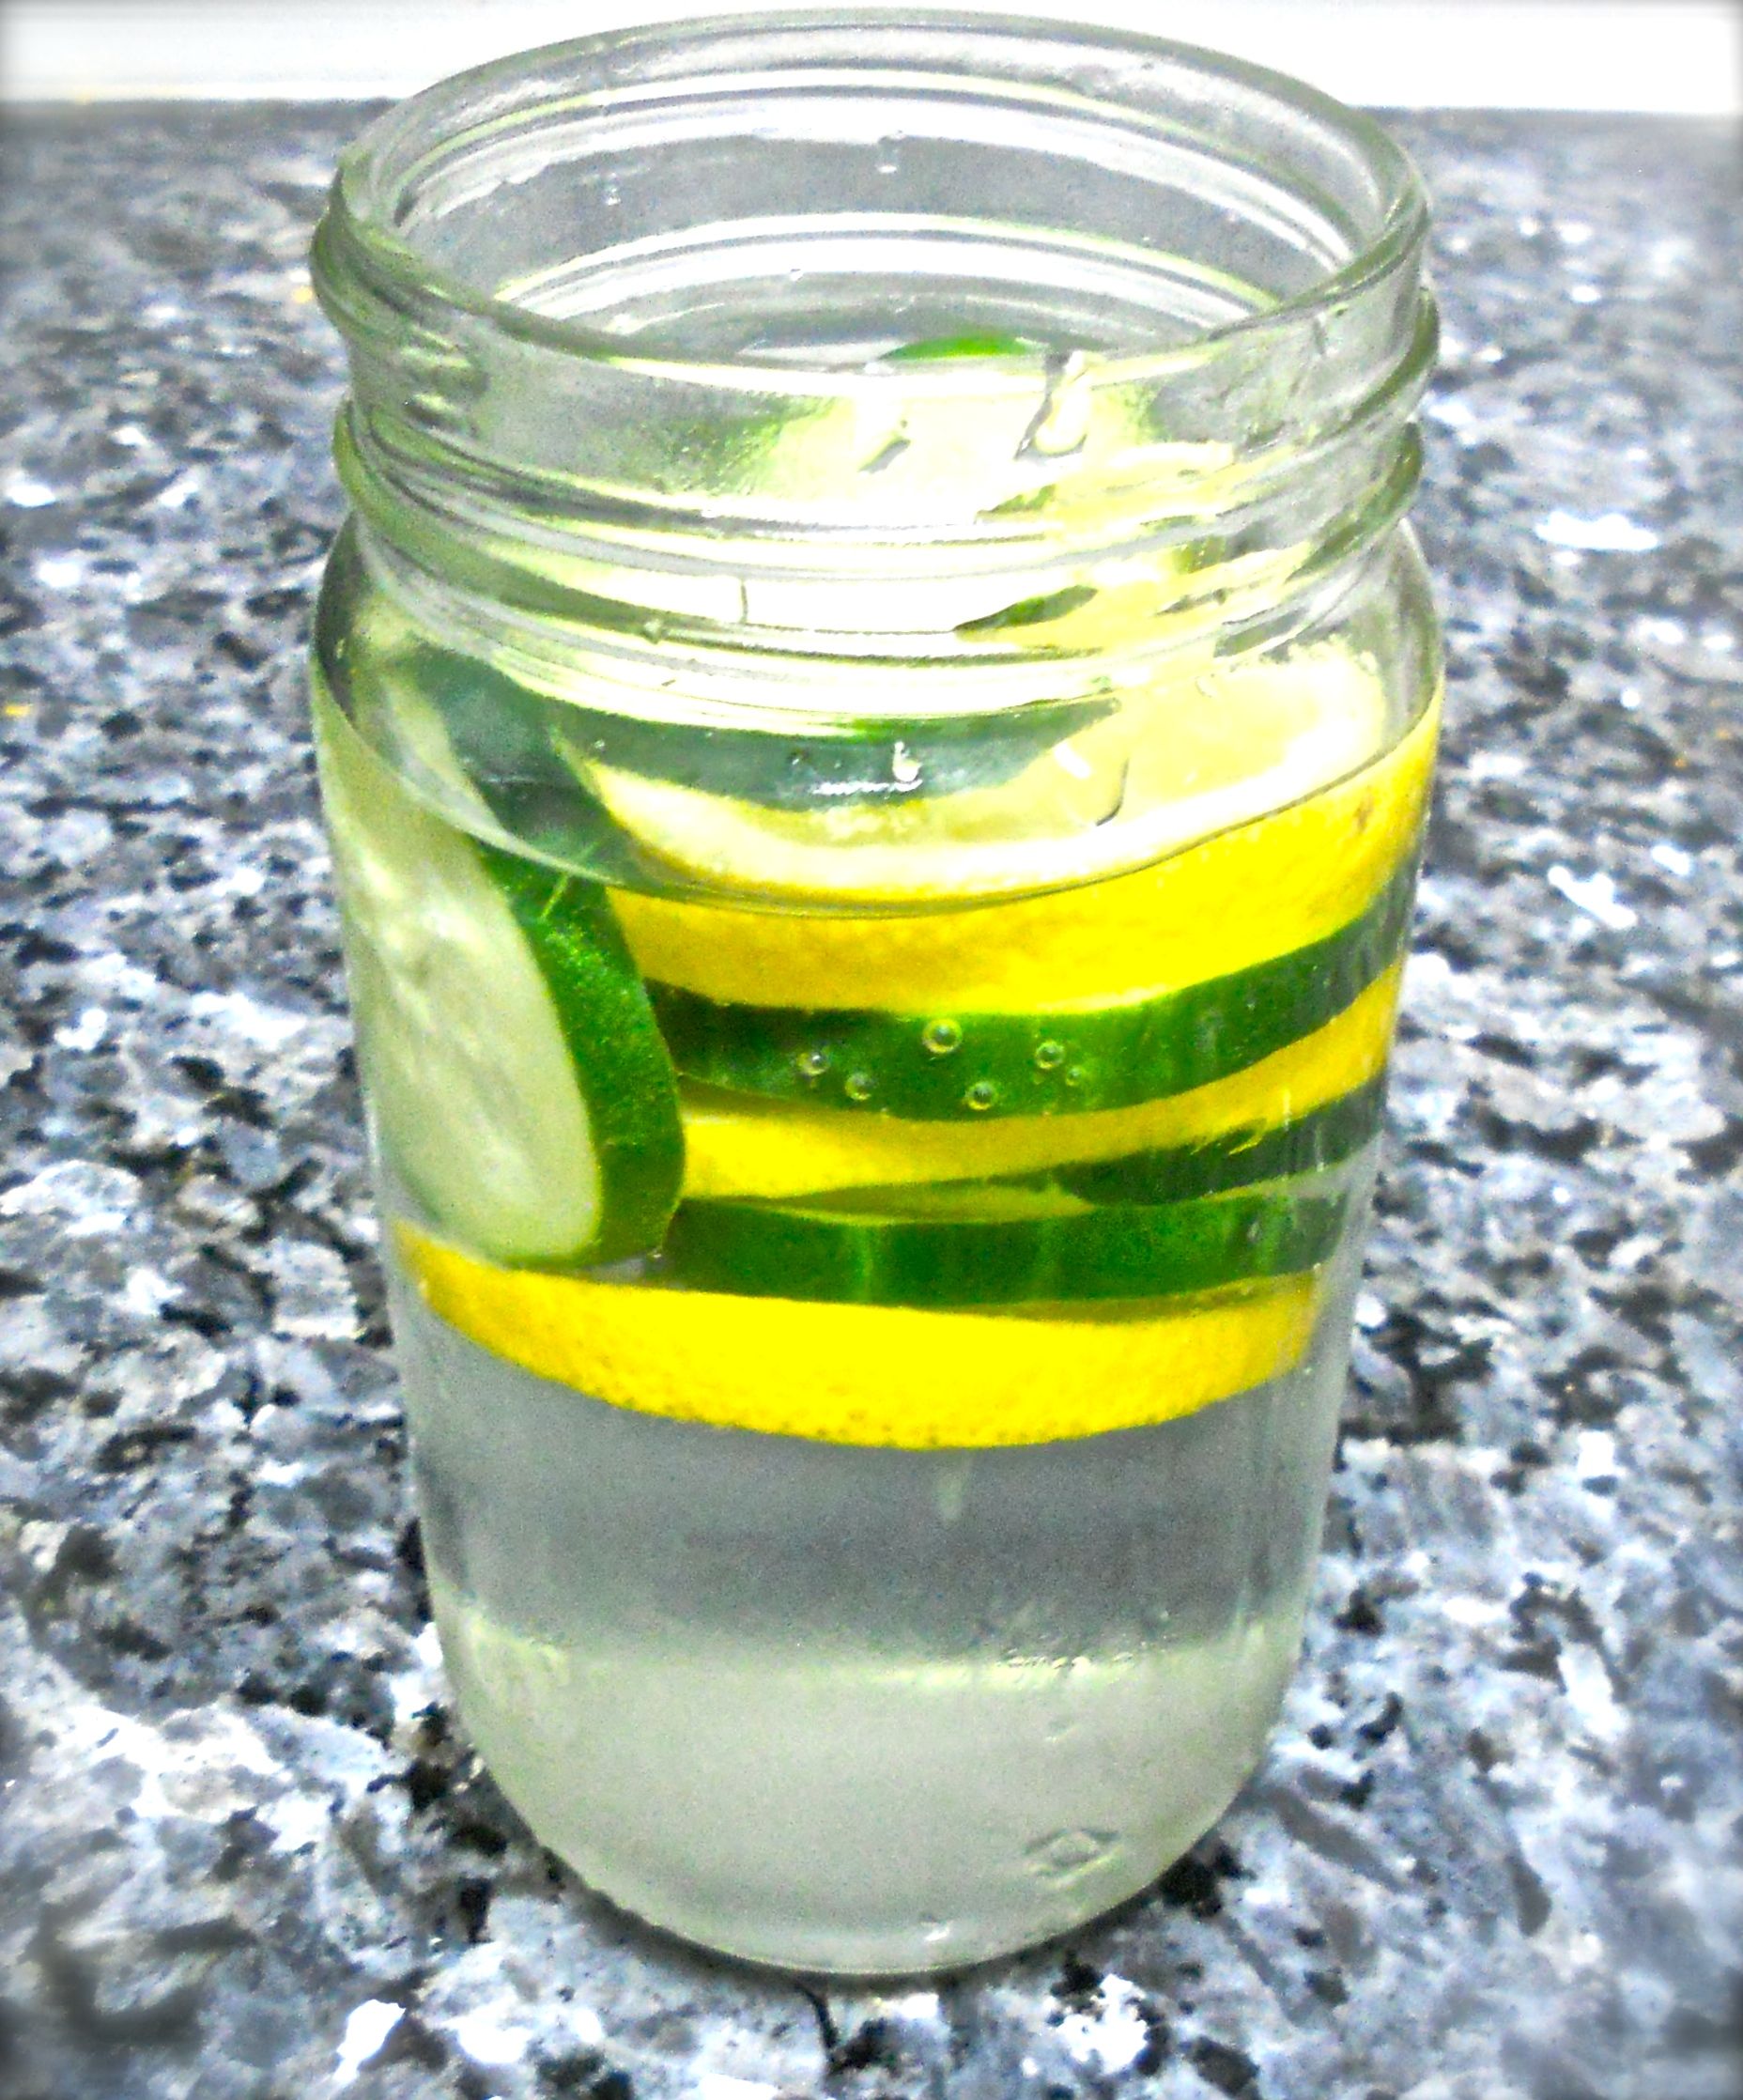 benefits of cucumber water